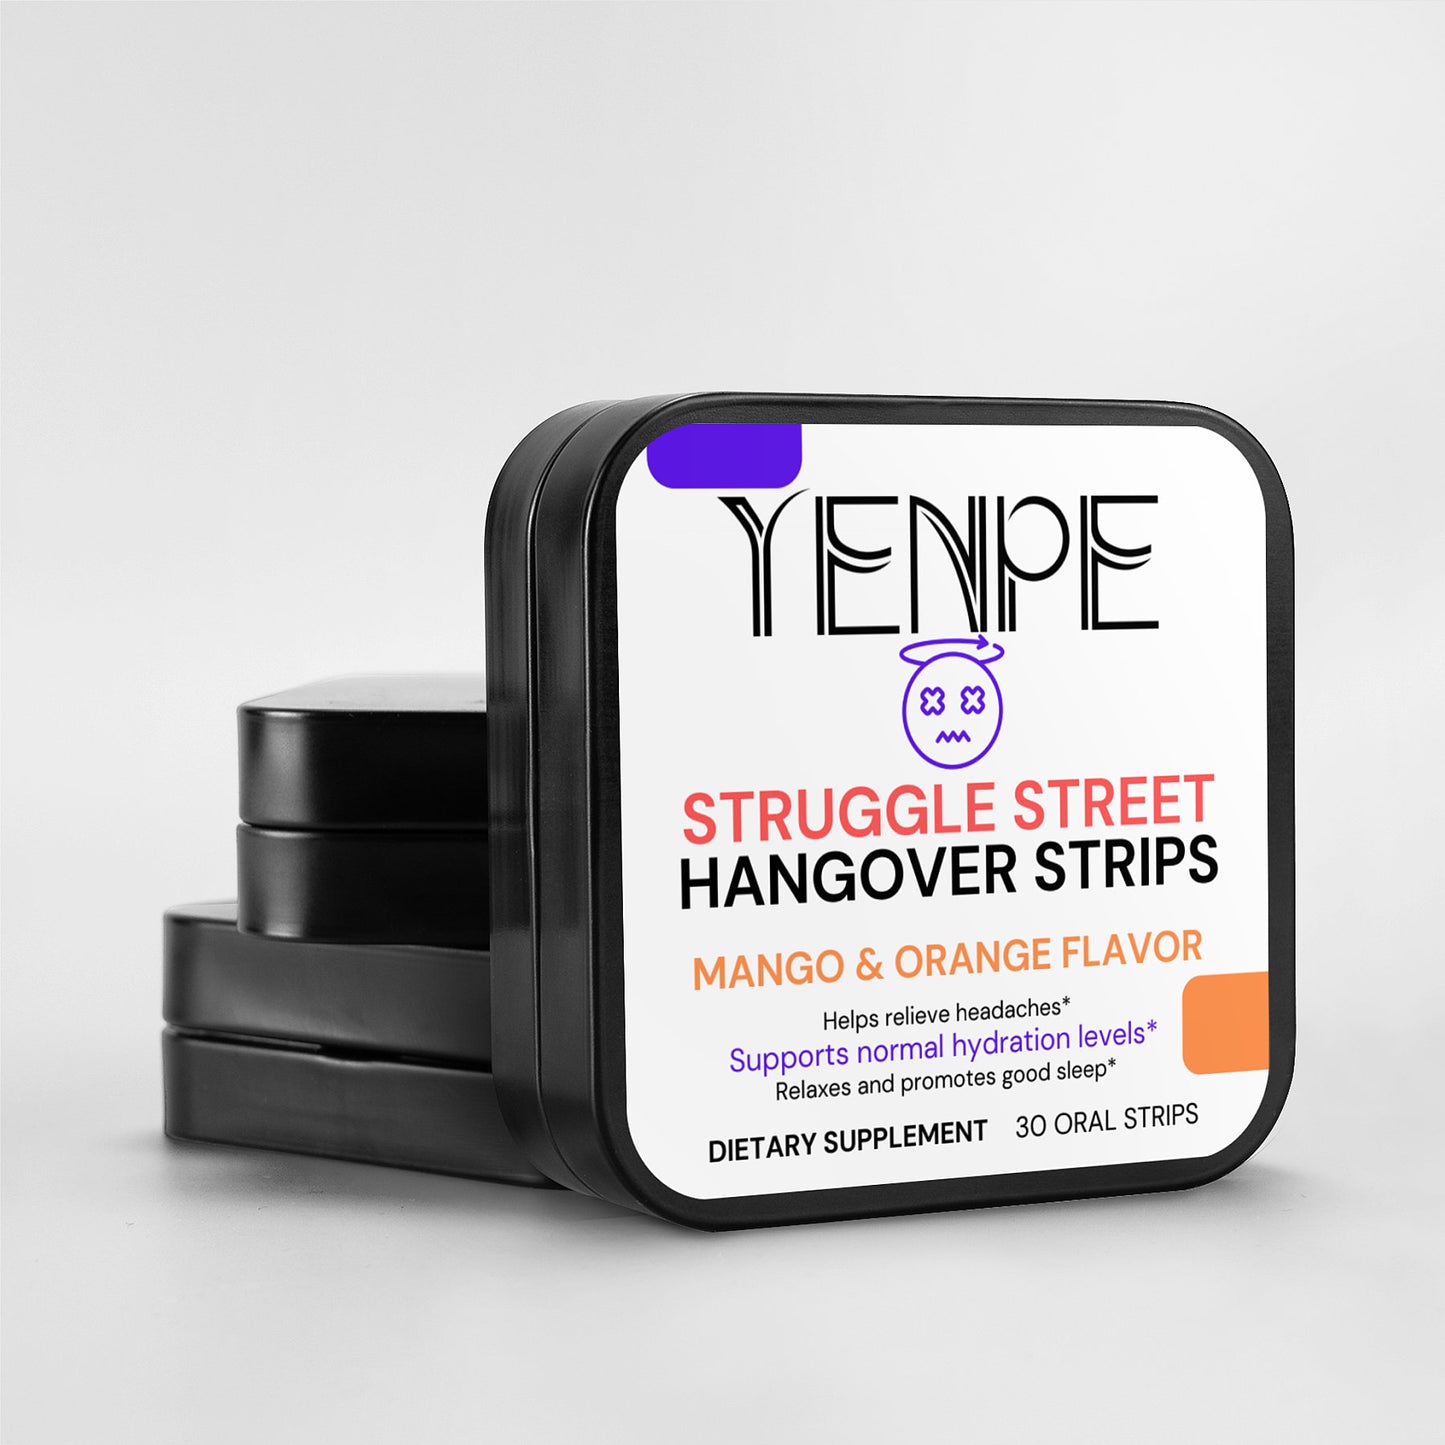 STRUGGLE STREET Hangover Strips